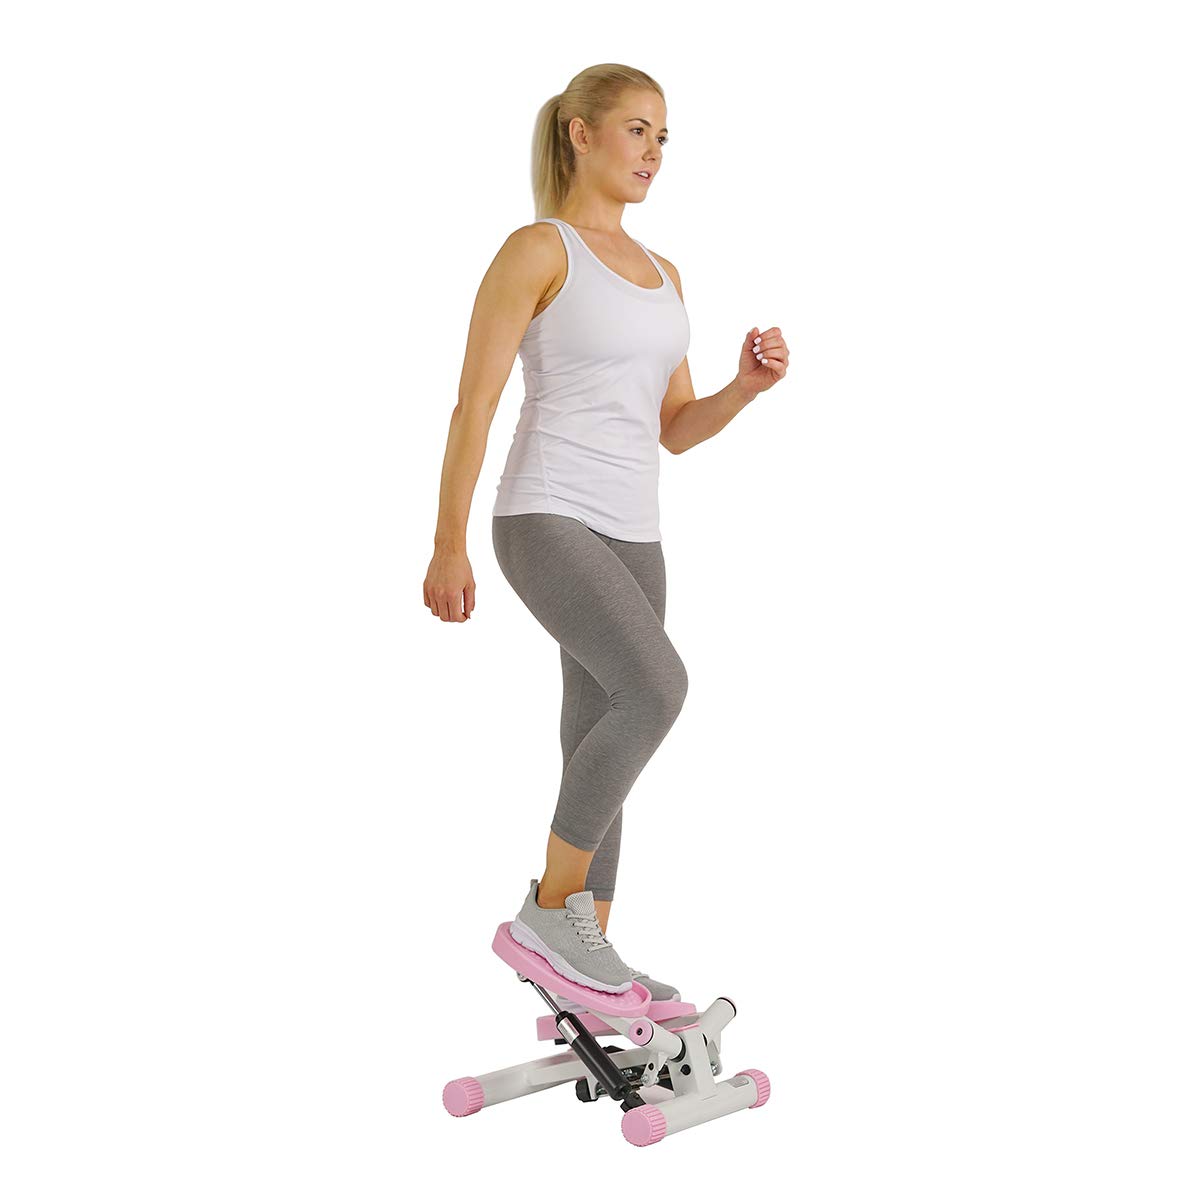 Sunny Health & Fitness 运动踏步机，便携式迷你楼梯踏步机，适合家庭、办公桌或办公室锻炼，...